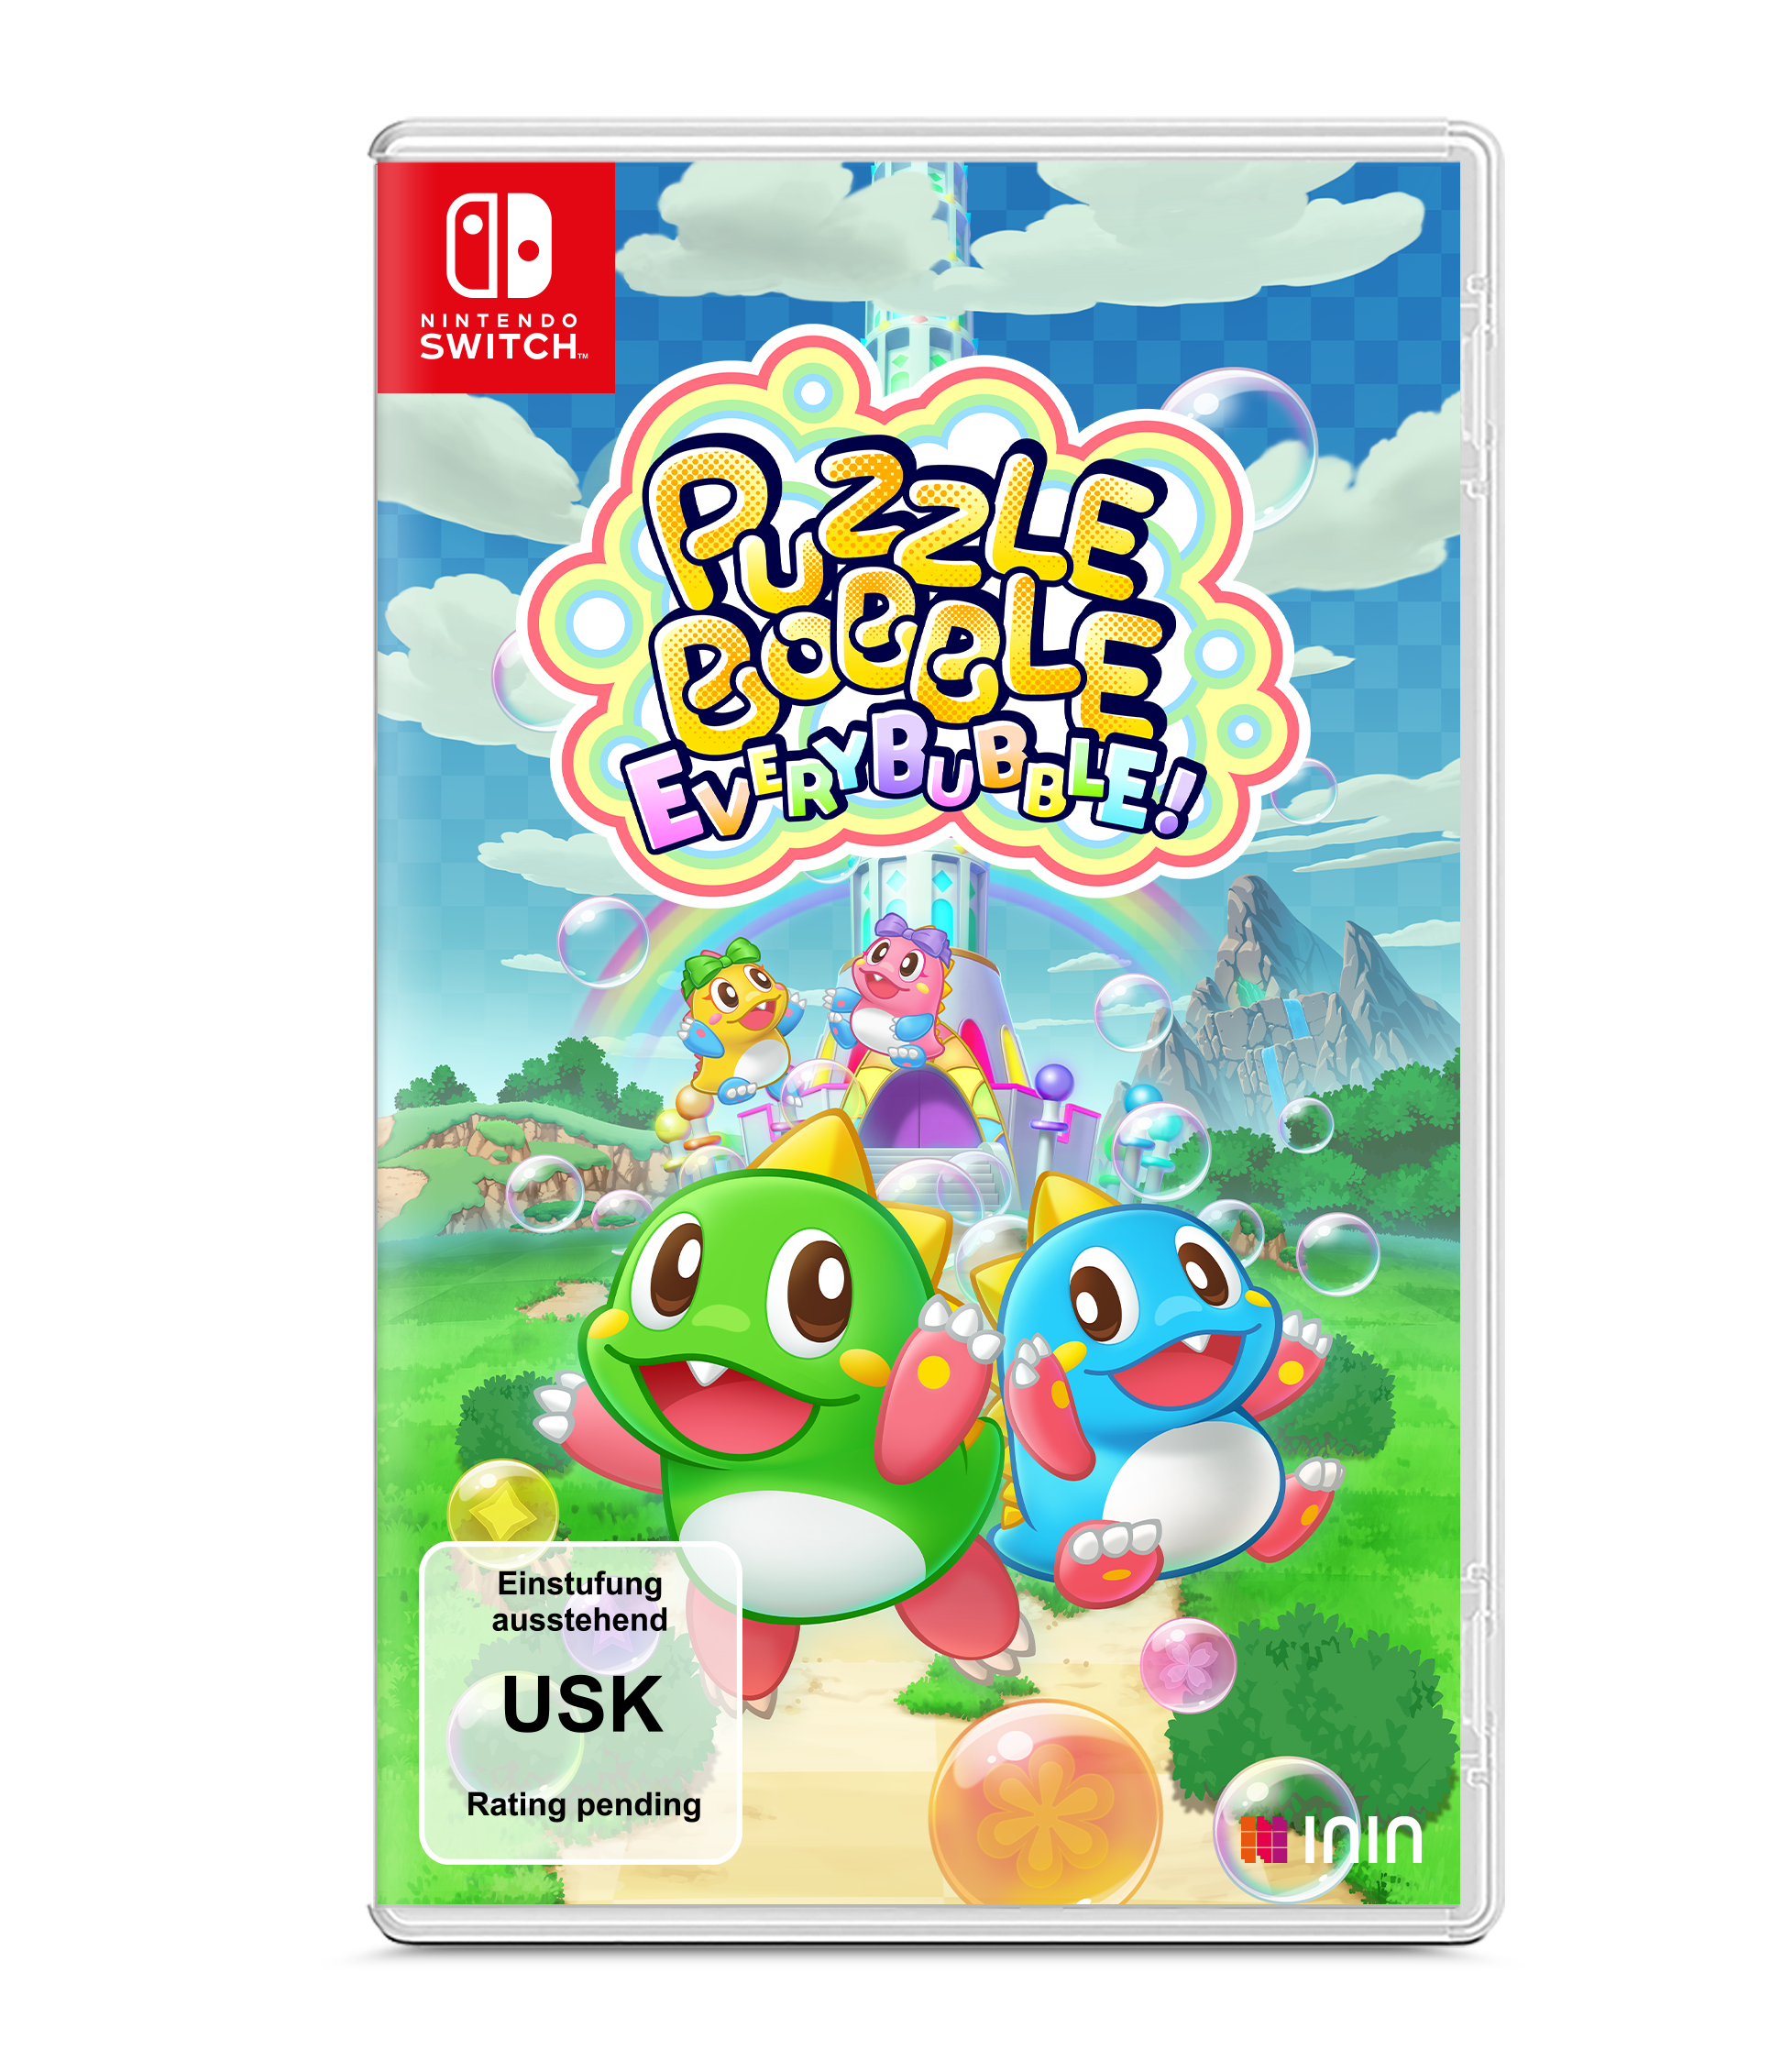 Switch] - Puzzle Bobble [Nintendo Everybubble!